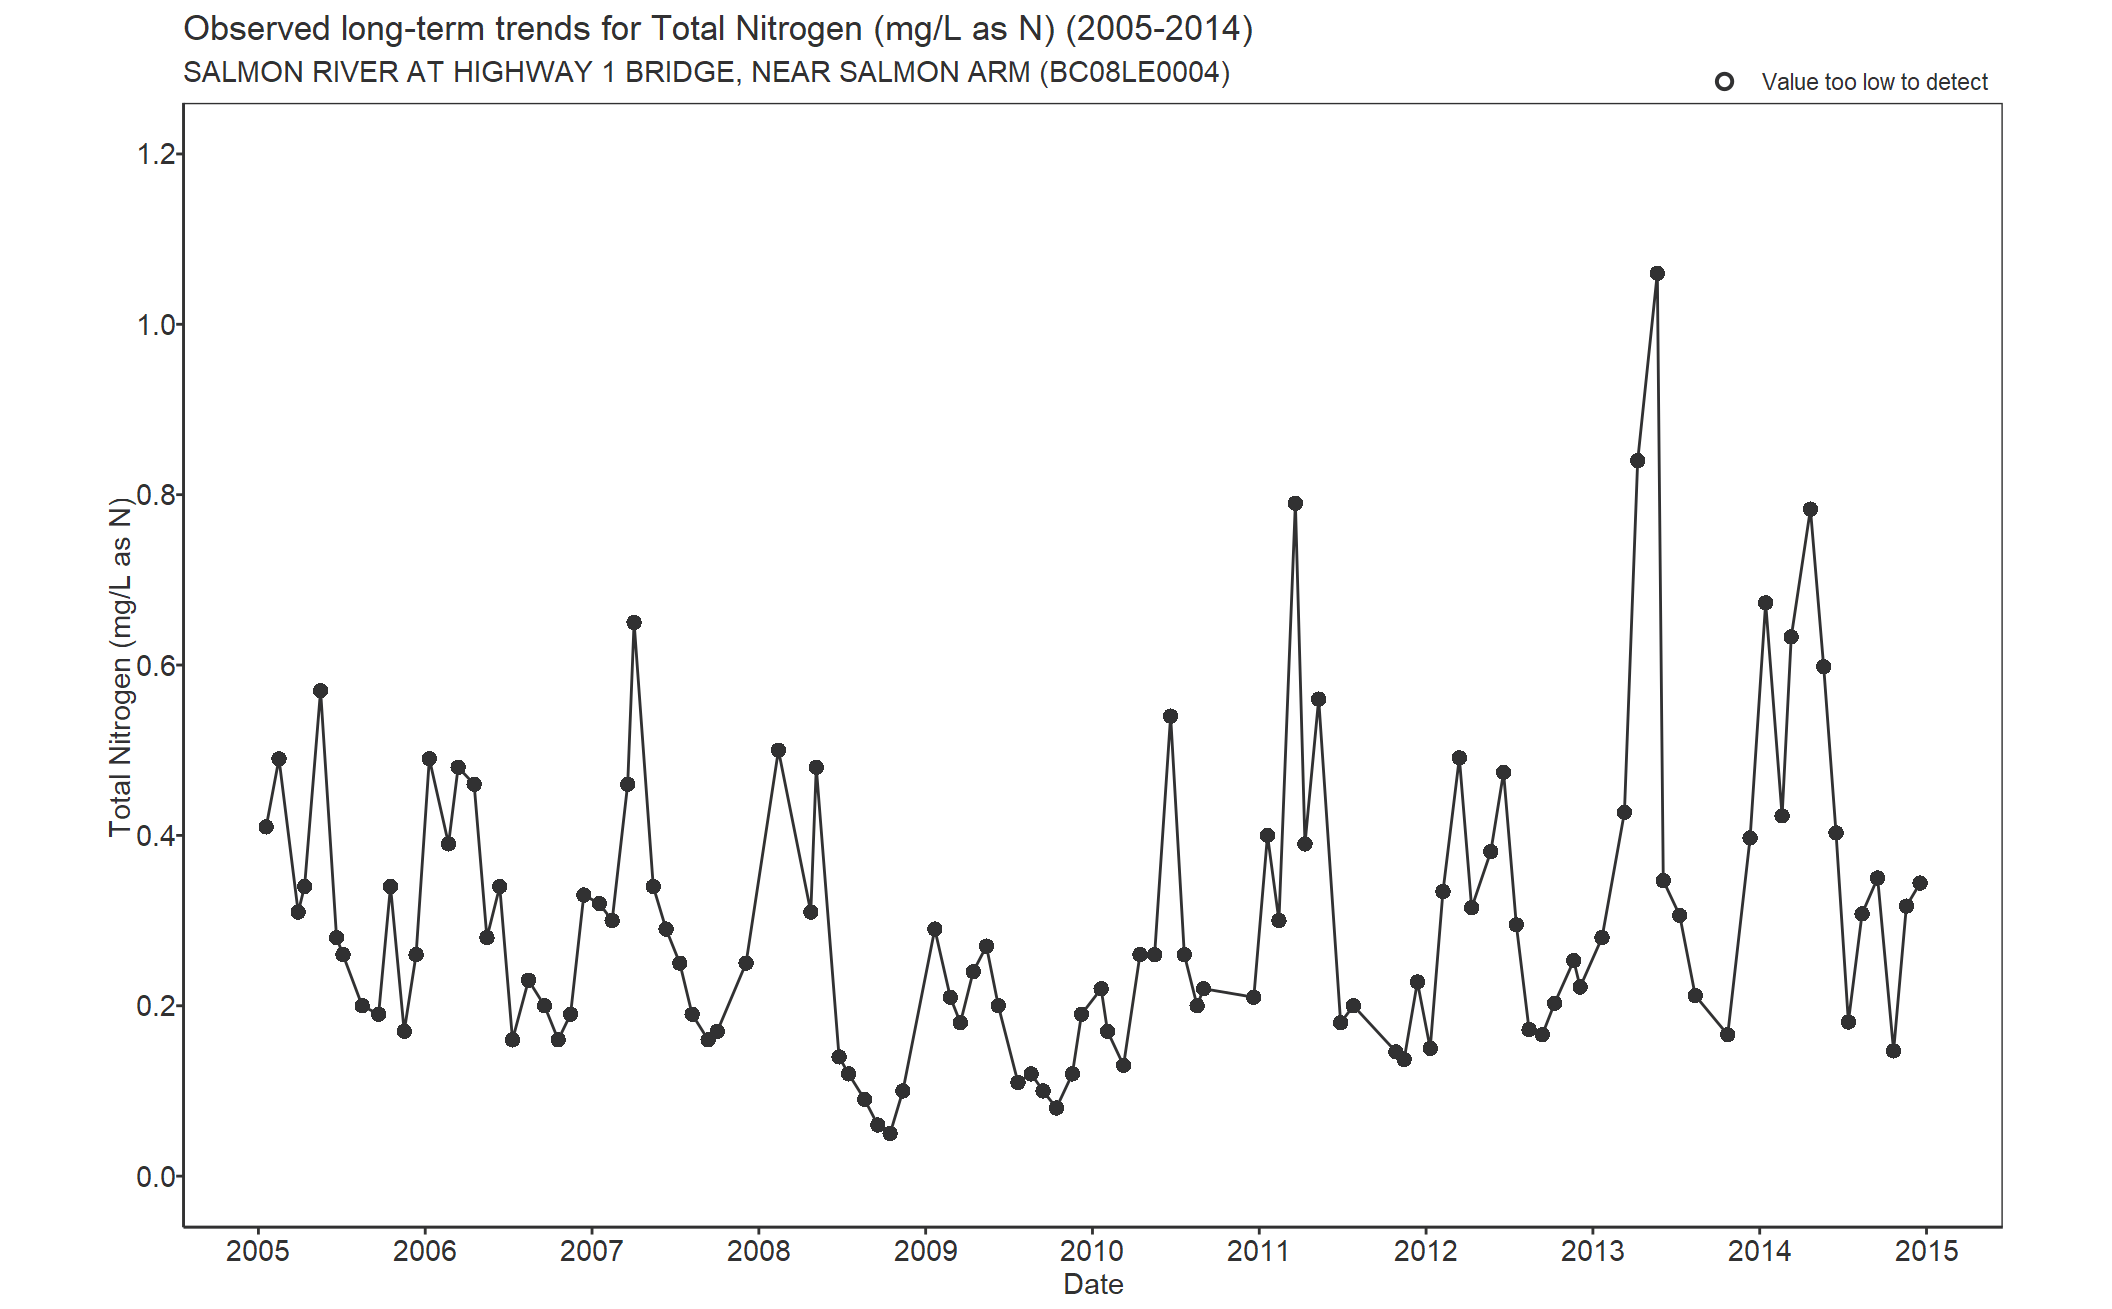 Observed long-term trends for Nitrogen Total (2005-2014)